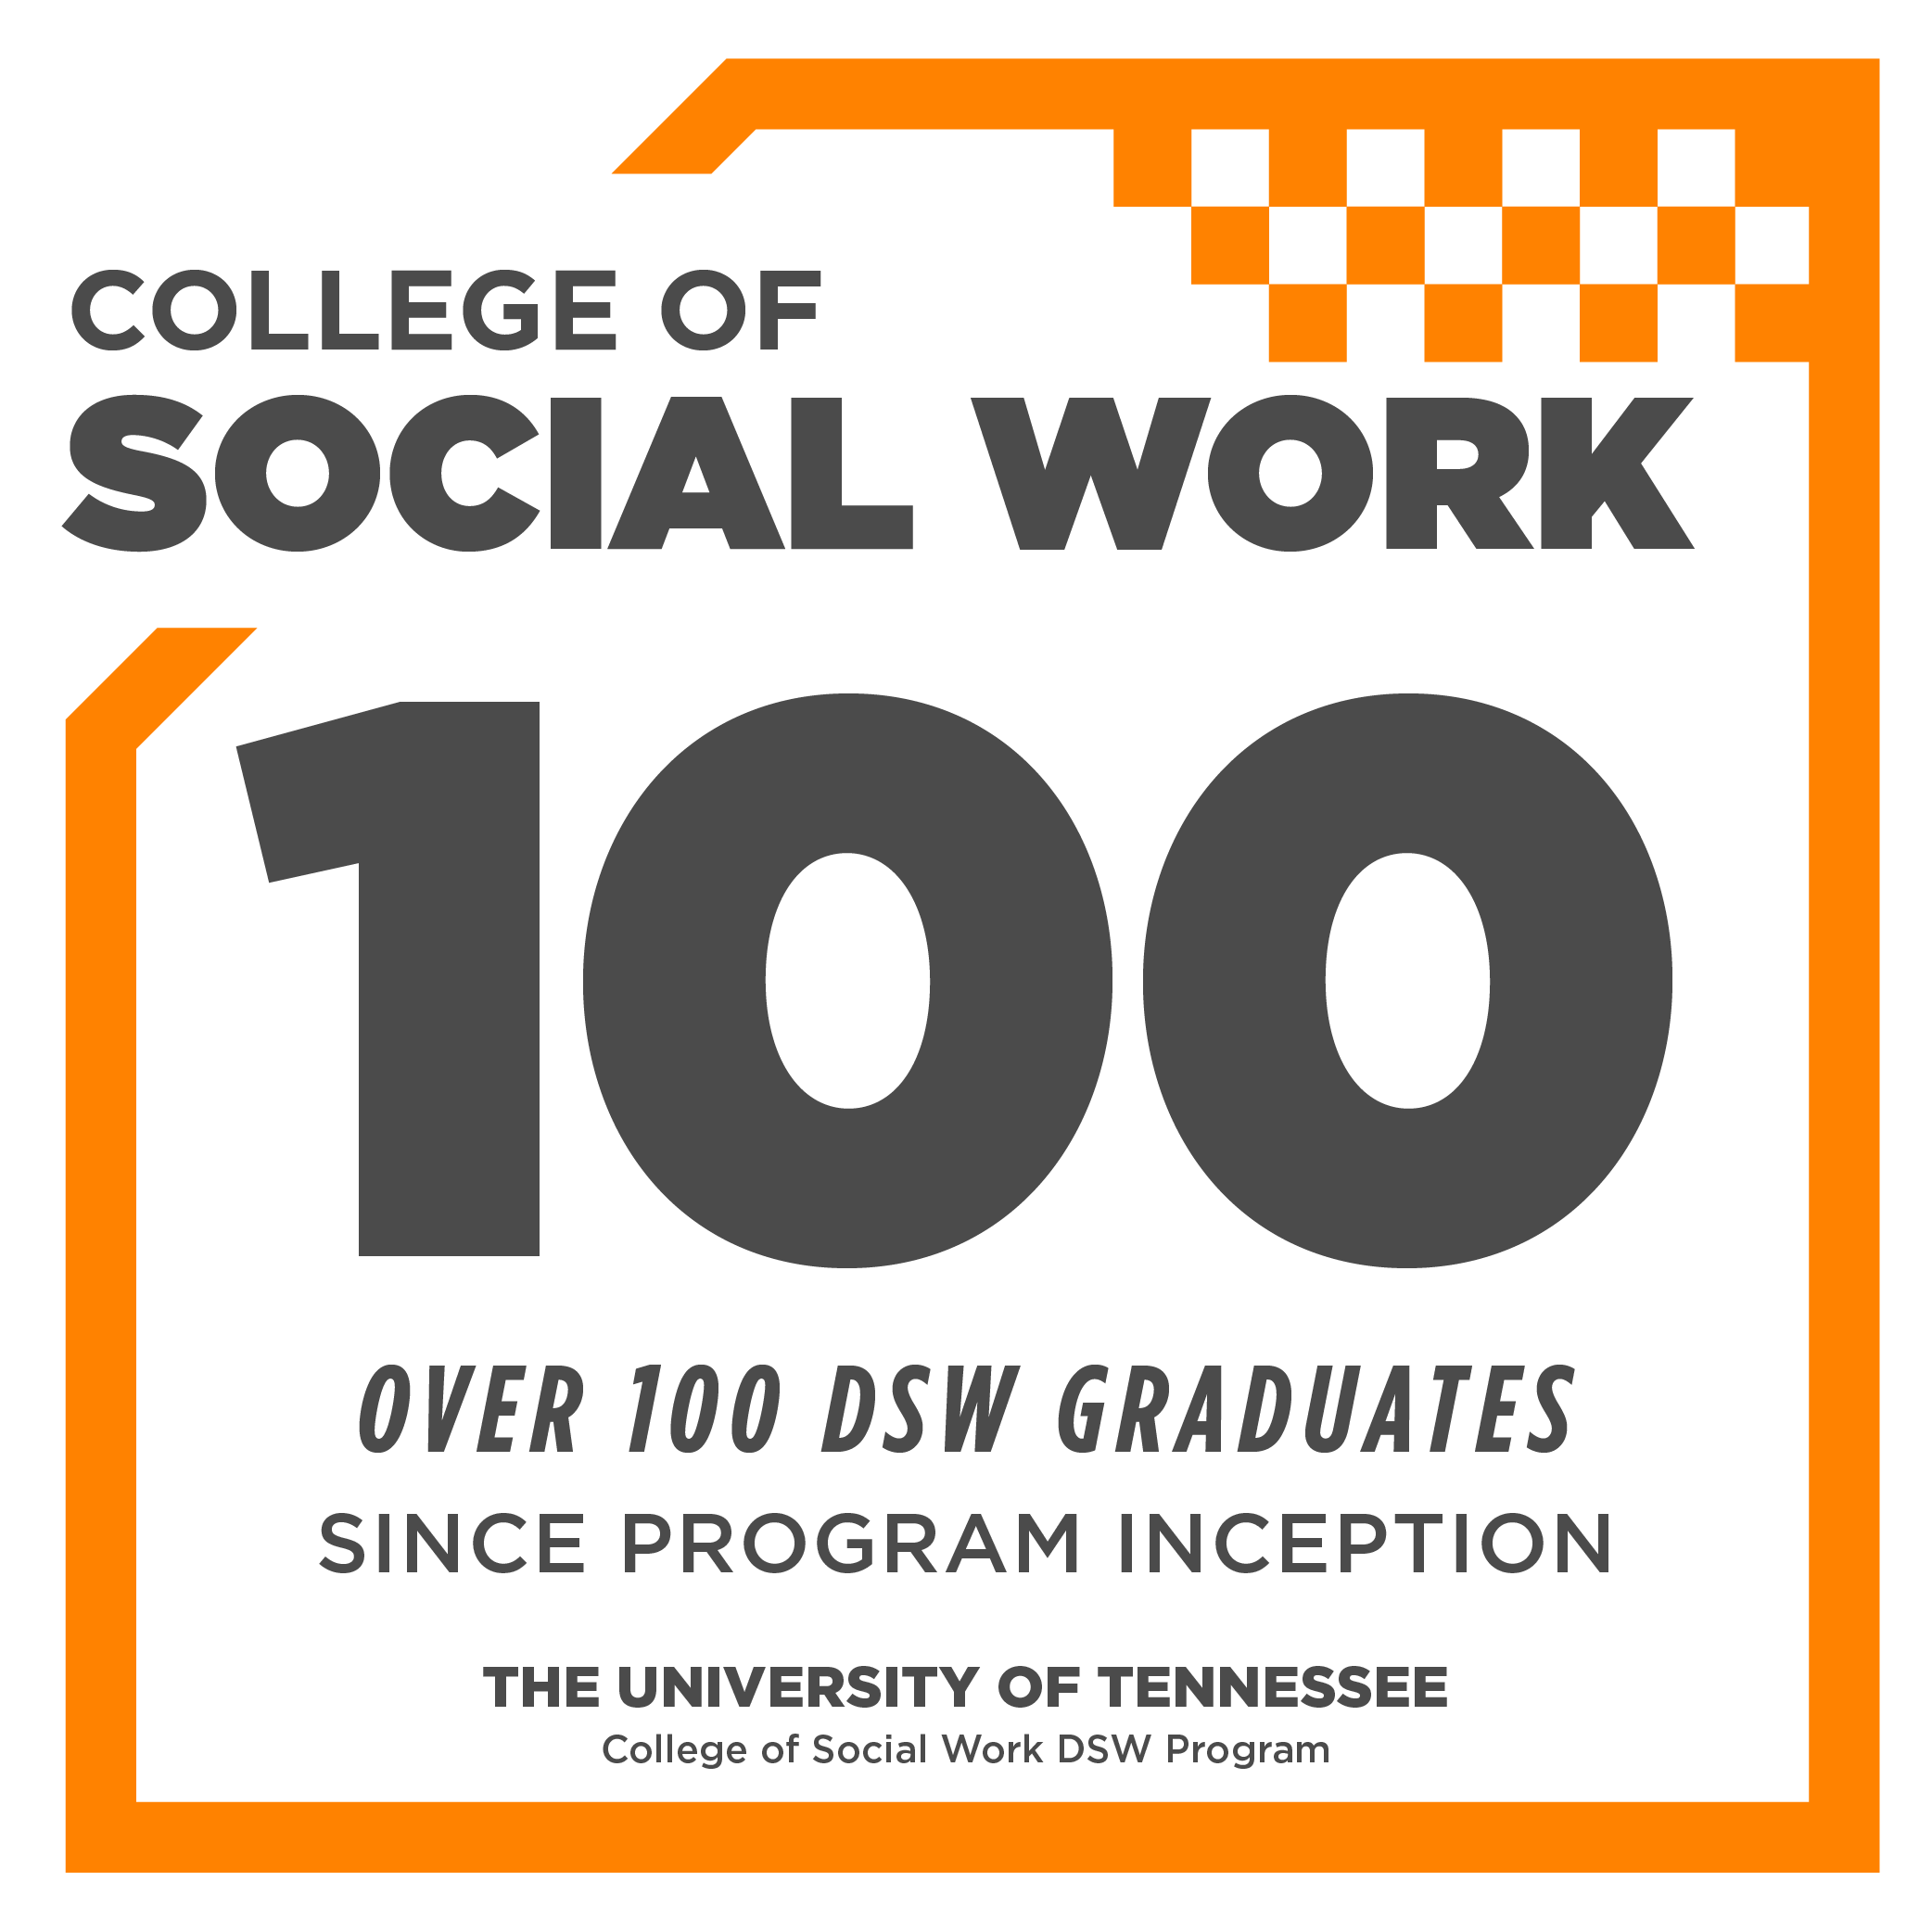 college of social work over 100 DSW graduates since program inception